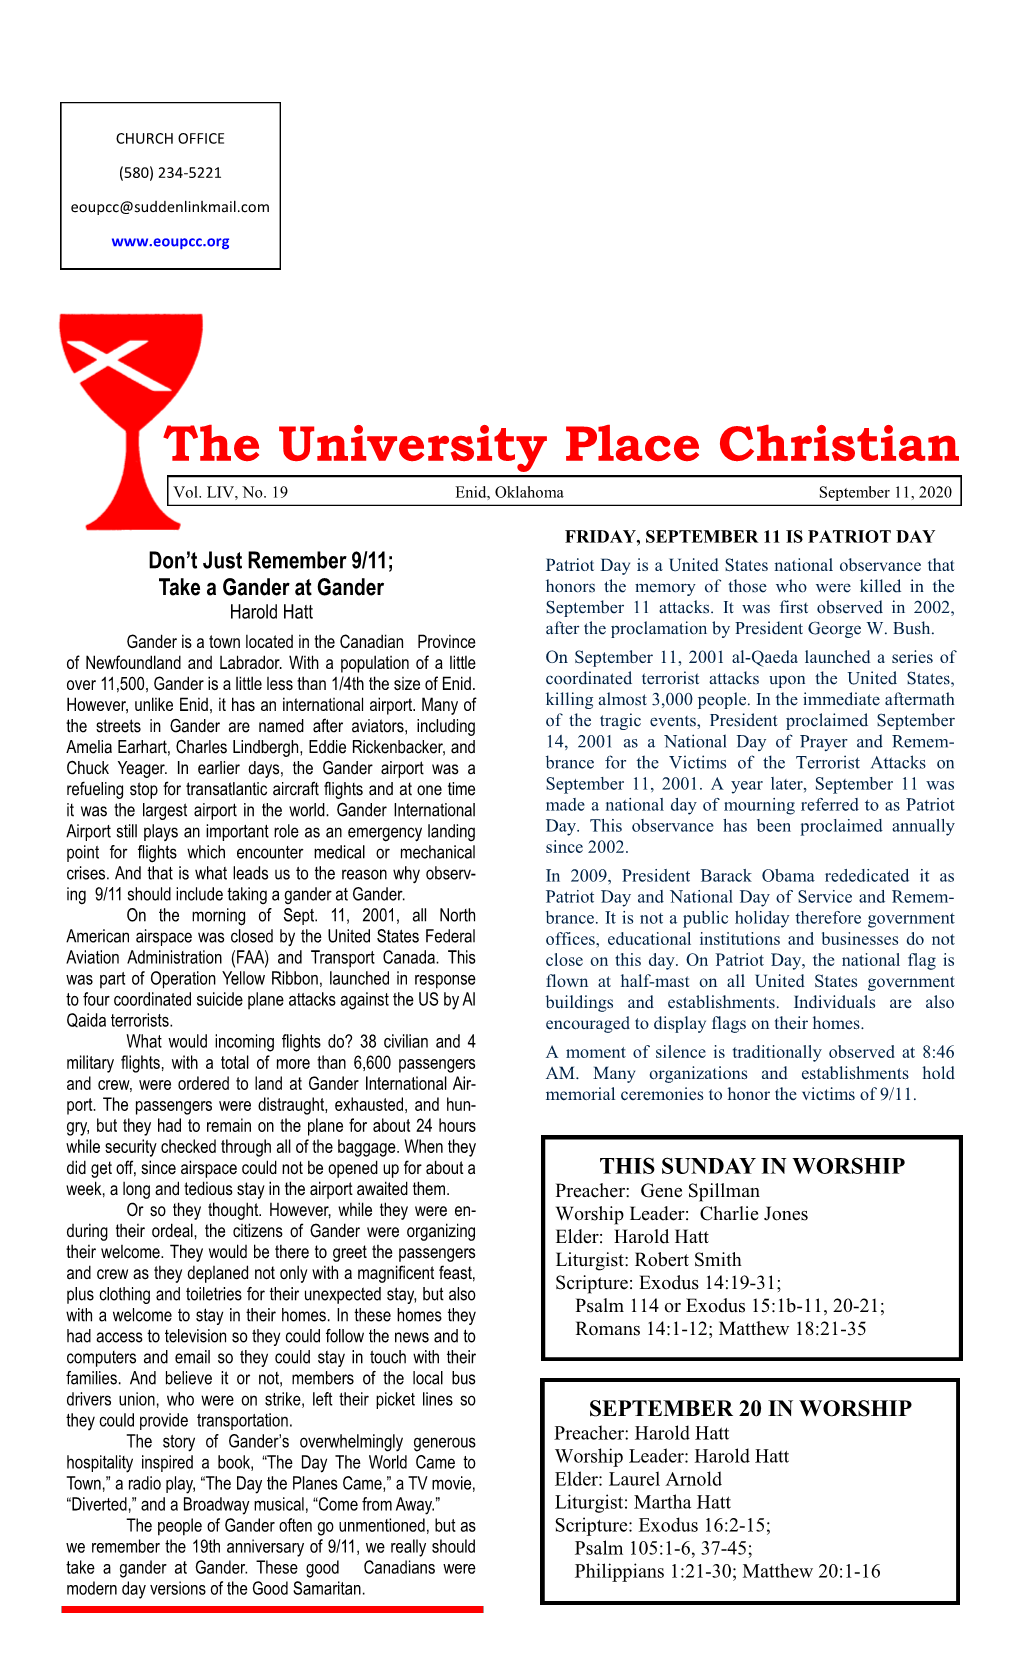 The University Place Christian Vol